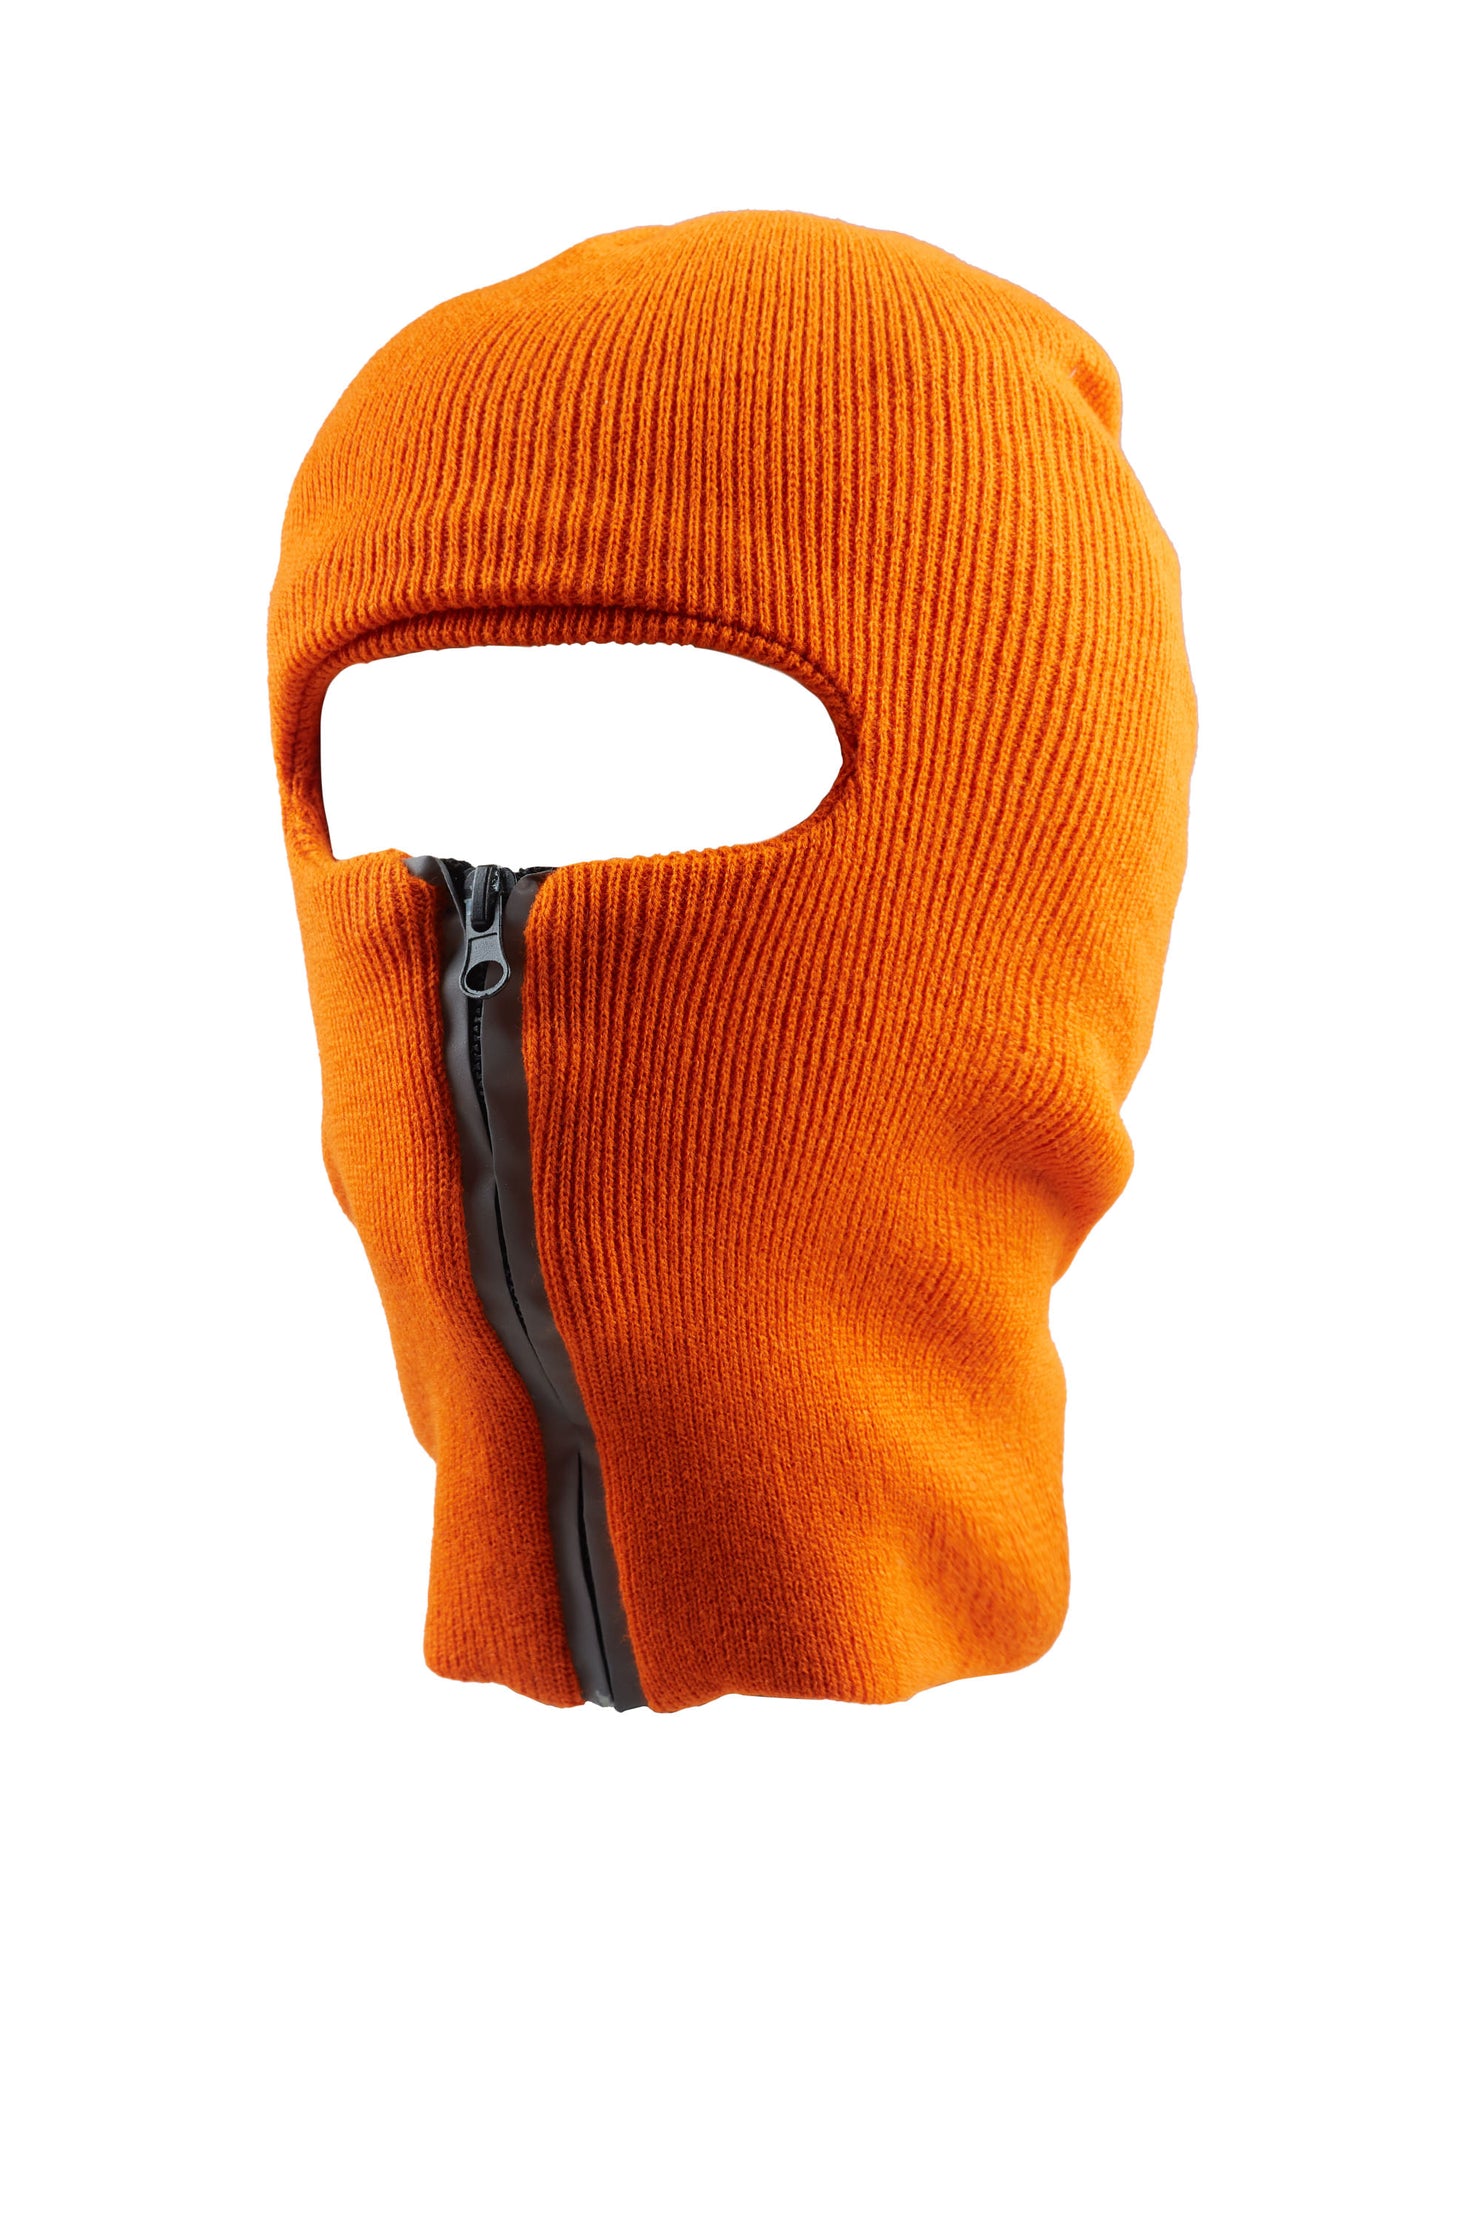 Anzel Orange Zipper Ski Mask